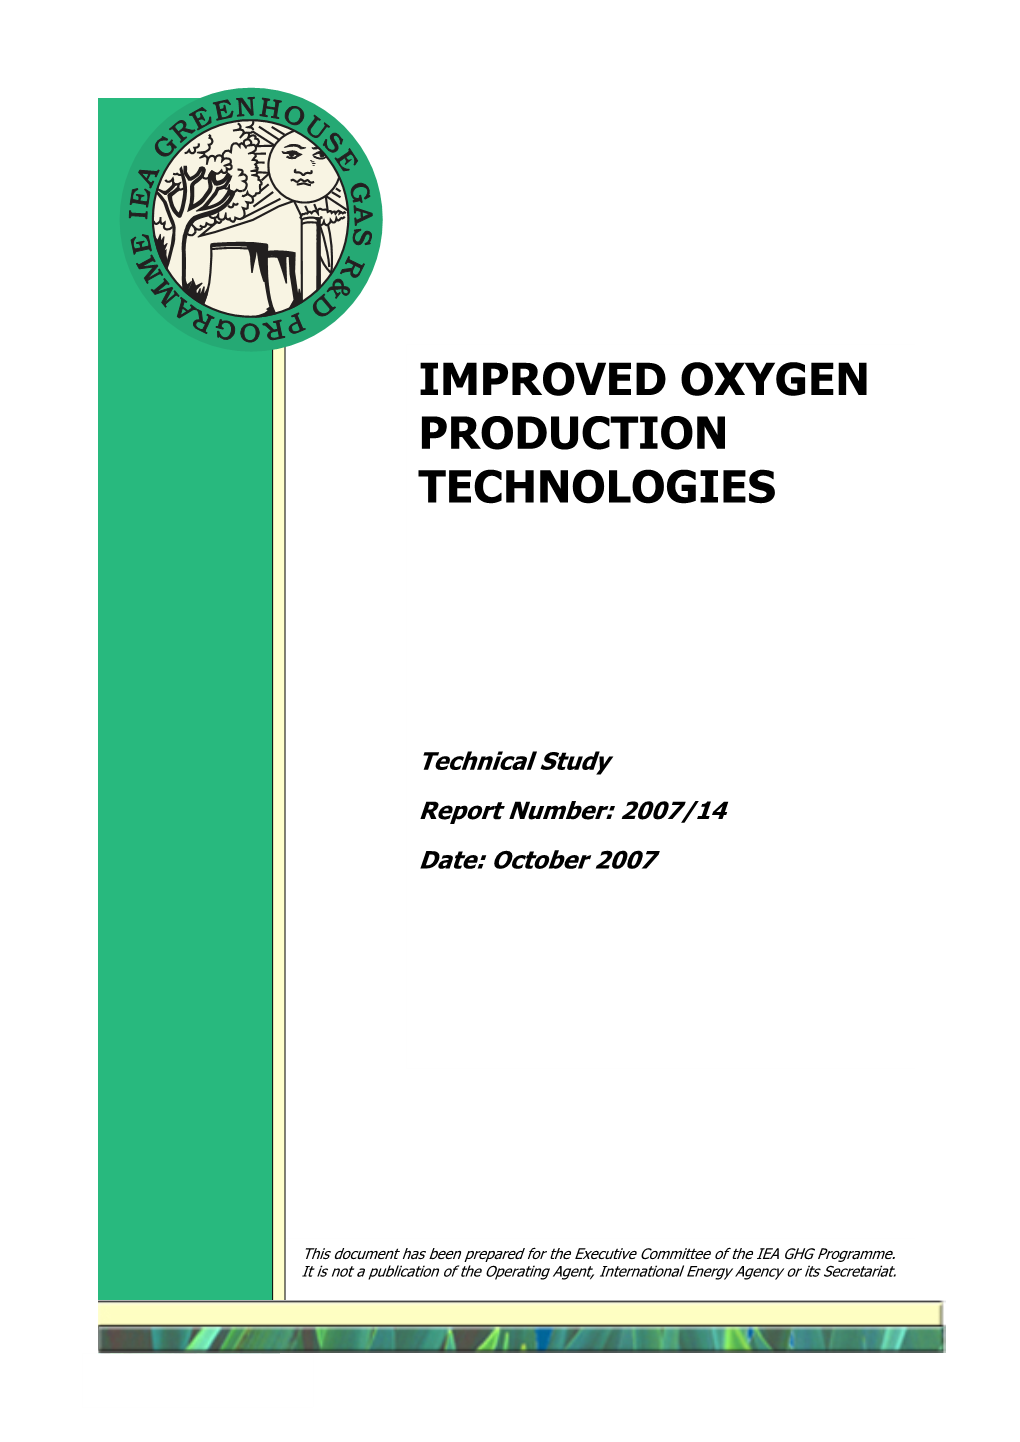 Oxygen Technologies